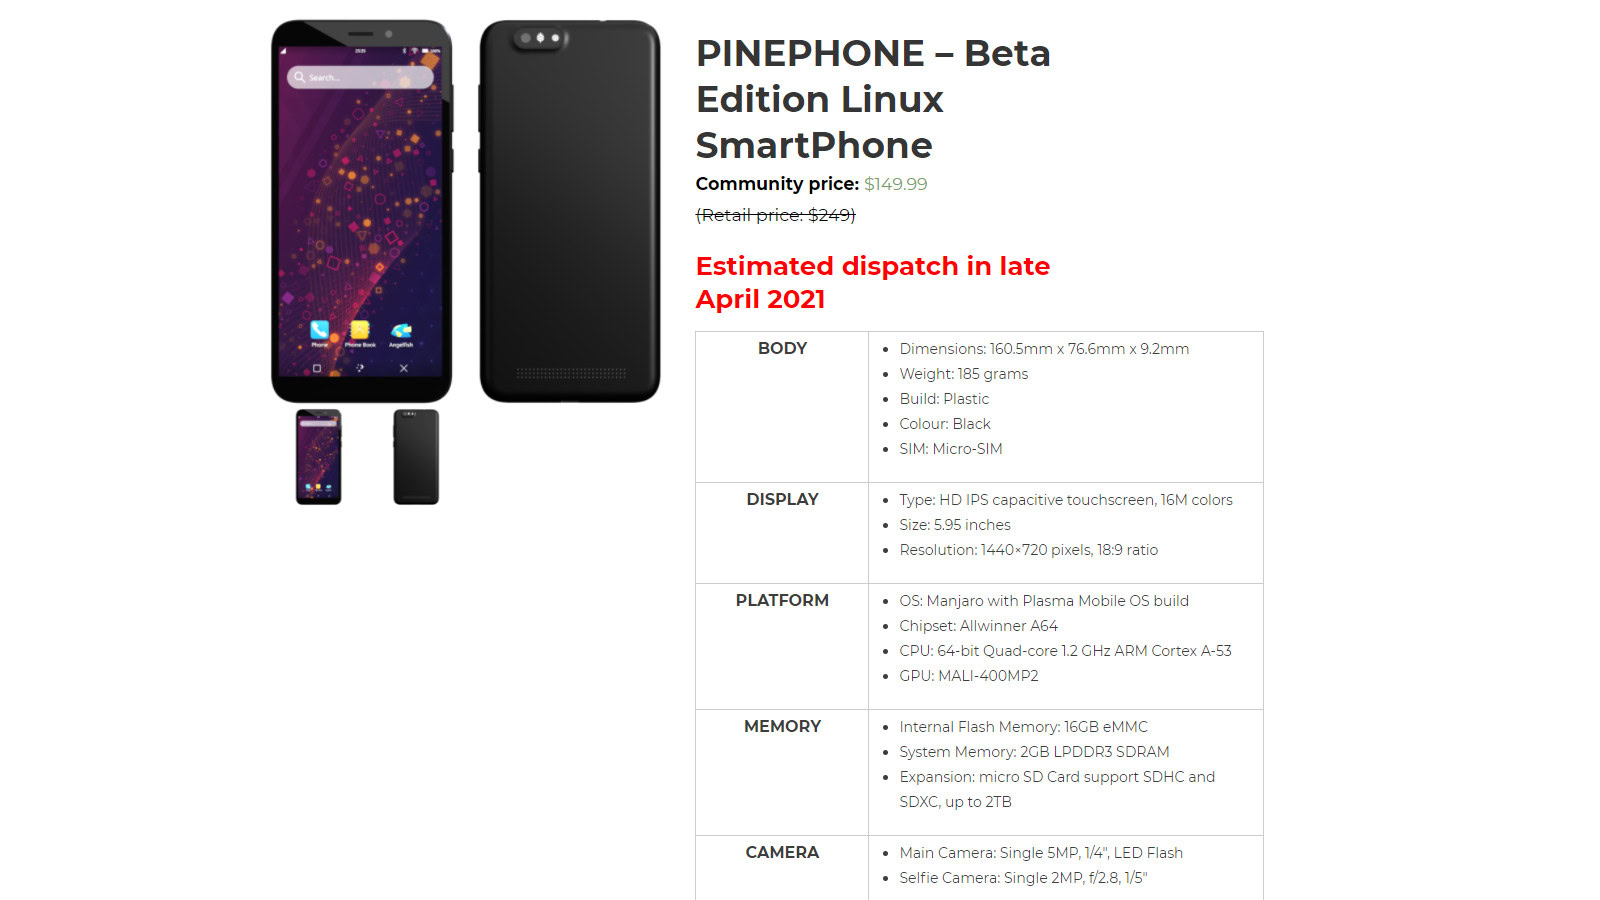 PinePhone beta edition